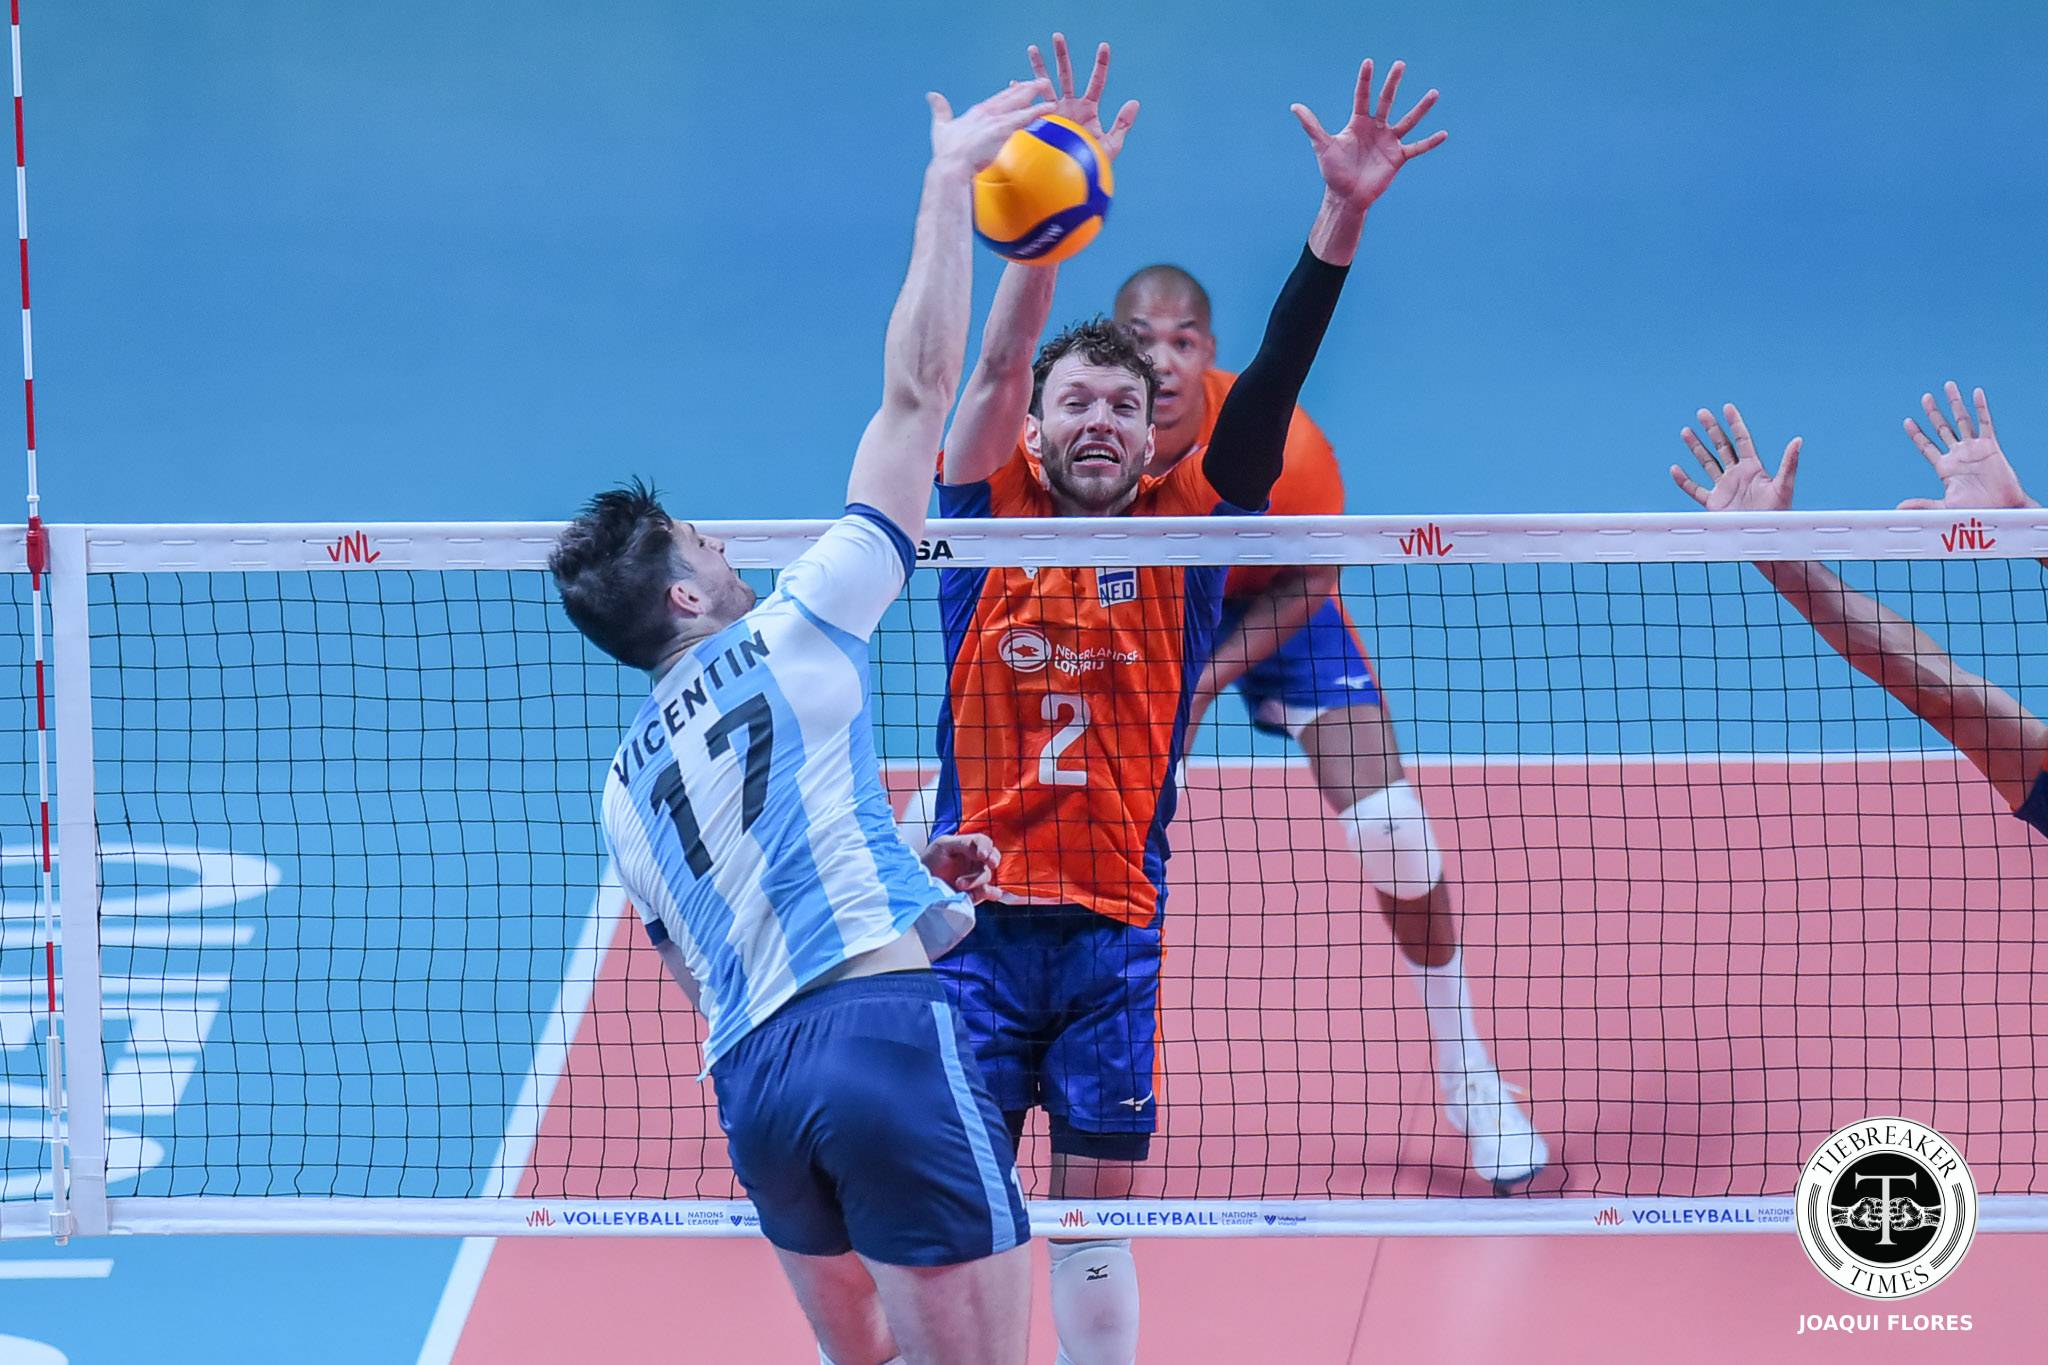 VNL-2022-Argentina-vs.-Netherlands-Wessel-Keemink-1560 VNL: Netherlands outlasts Argentina in highly-charged five-set match 2022 VNL Season News Volleyball  - philippine sports news